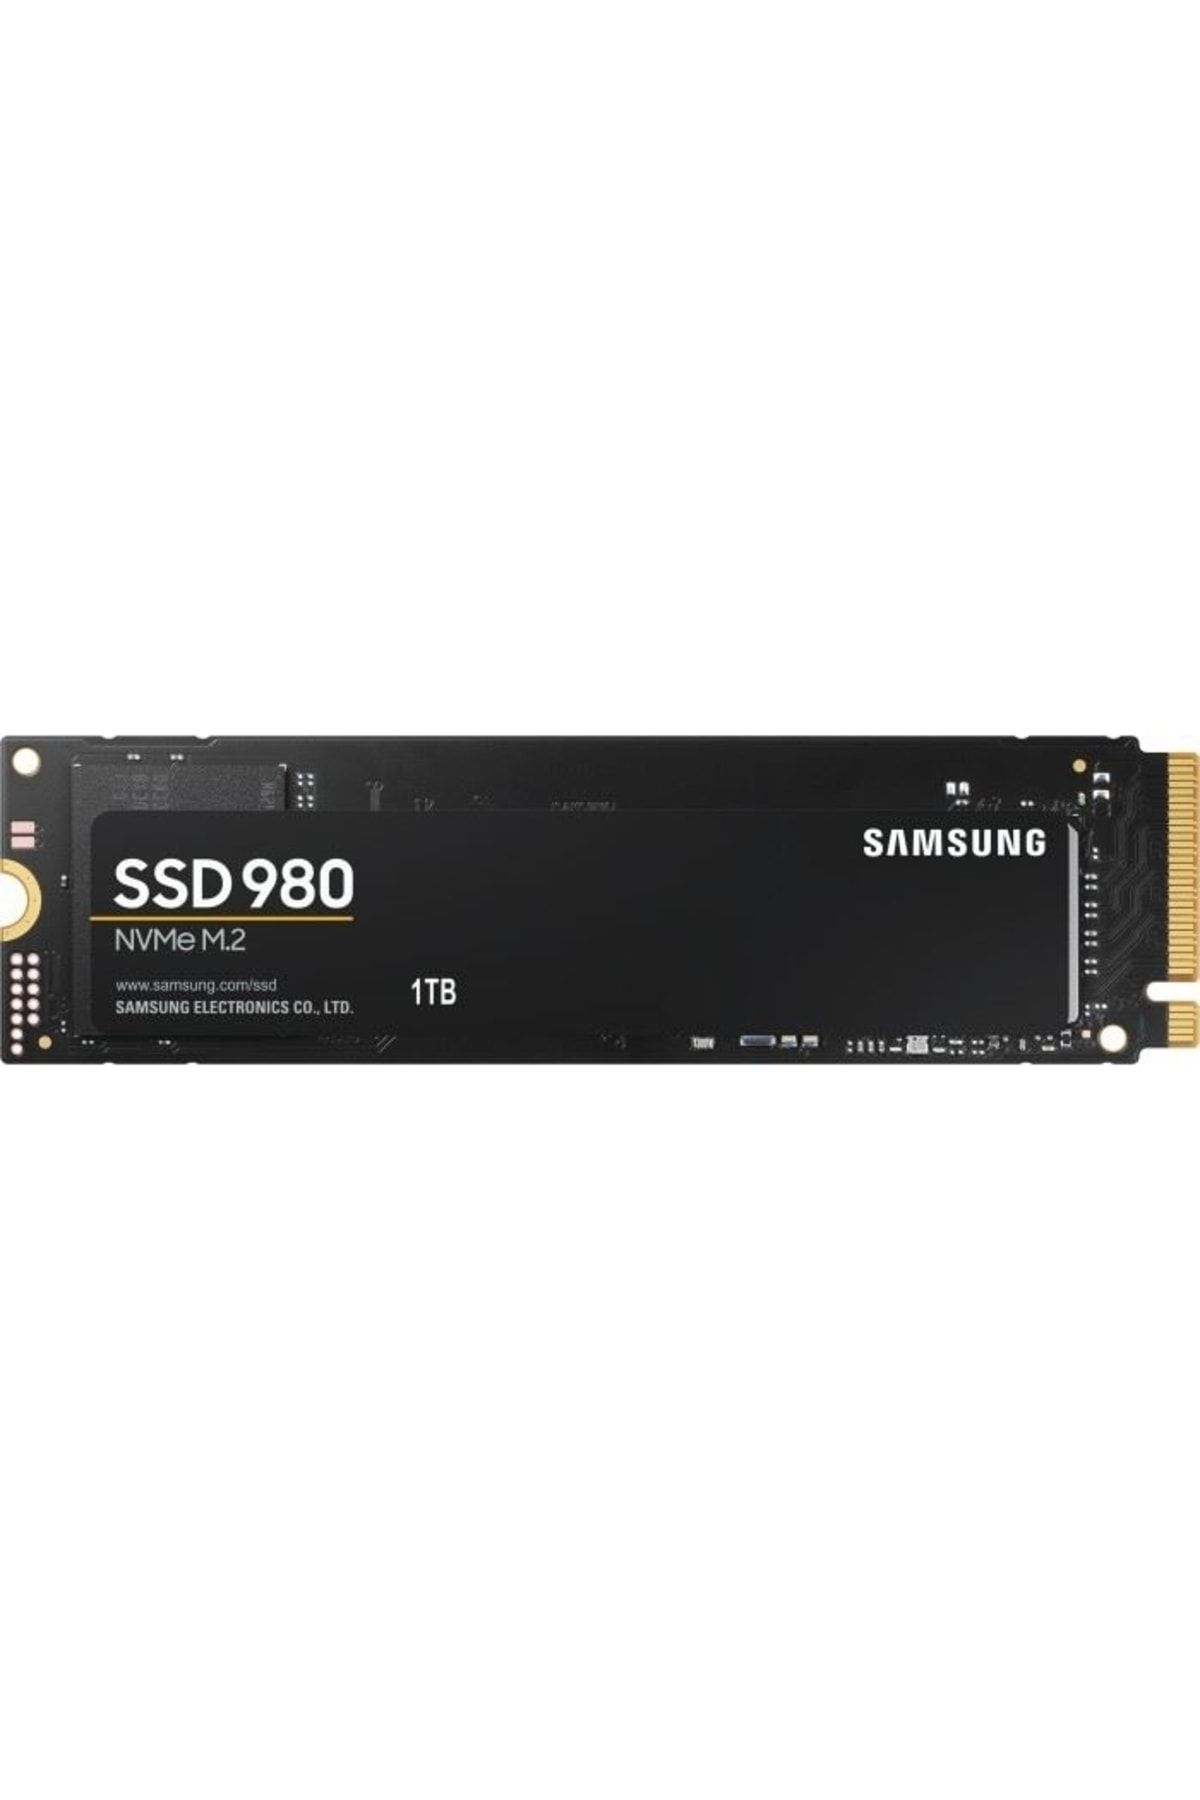 Samsung 1tb Ssd980 Mz-v8v1t0bw 3500-3000mb/s M2 Nvme Disk